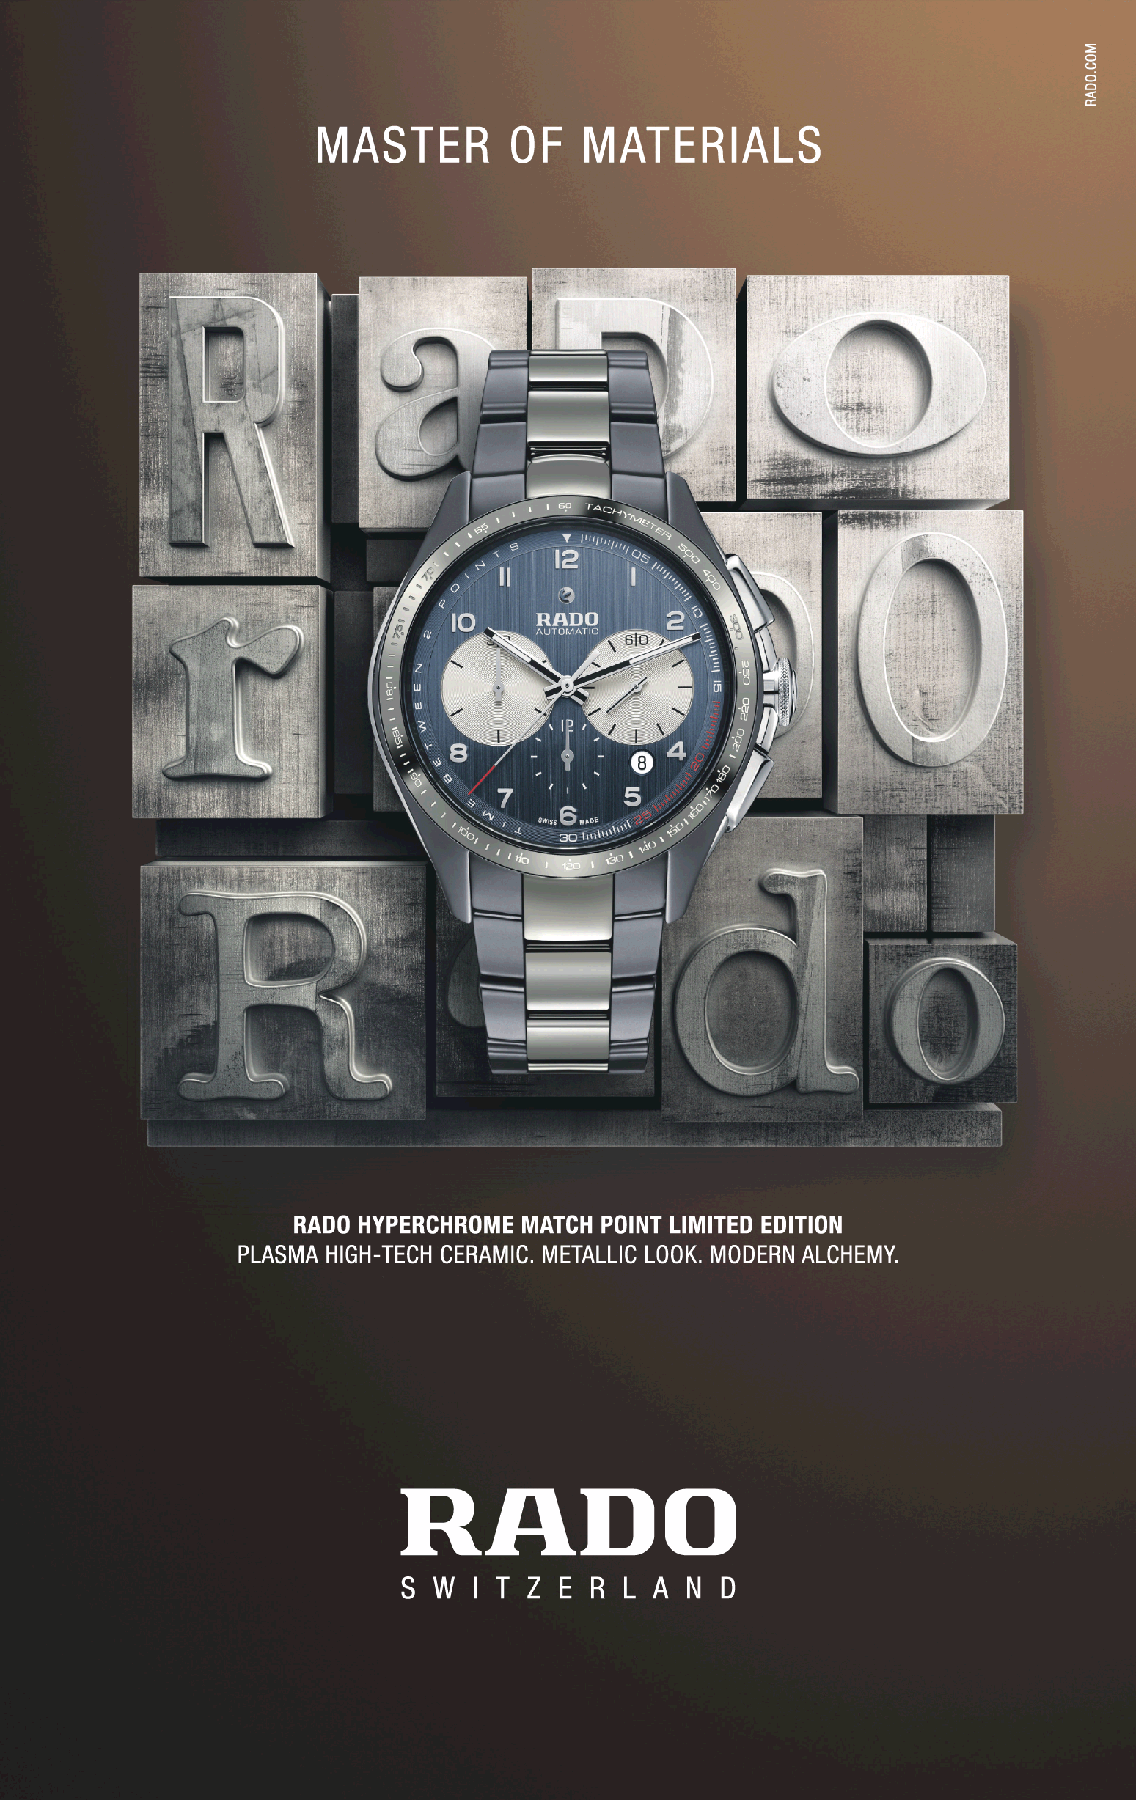 rado-switzerland-watches-rado-hyperchrome-ad-times-of-india-mumbai-17-11-2018.png